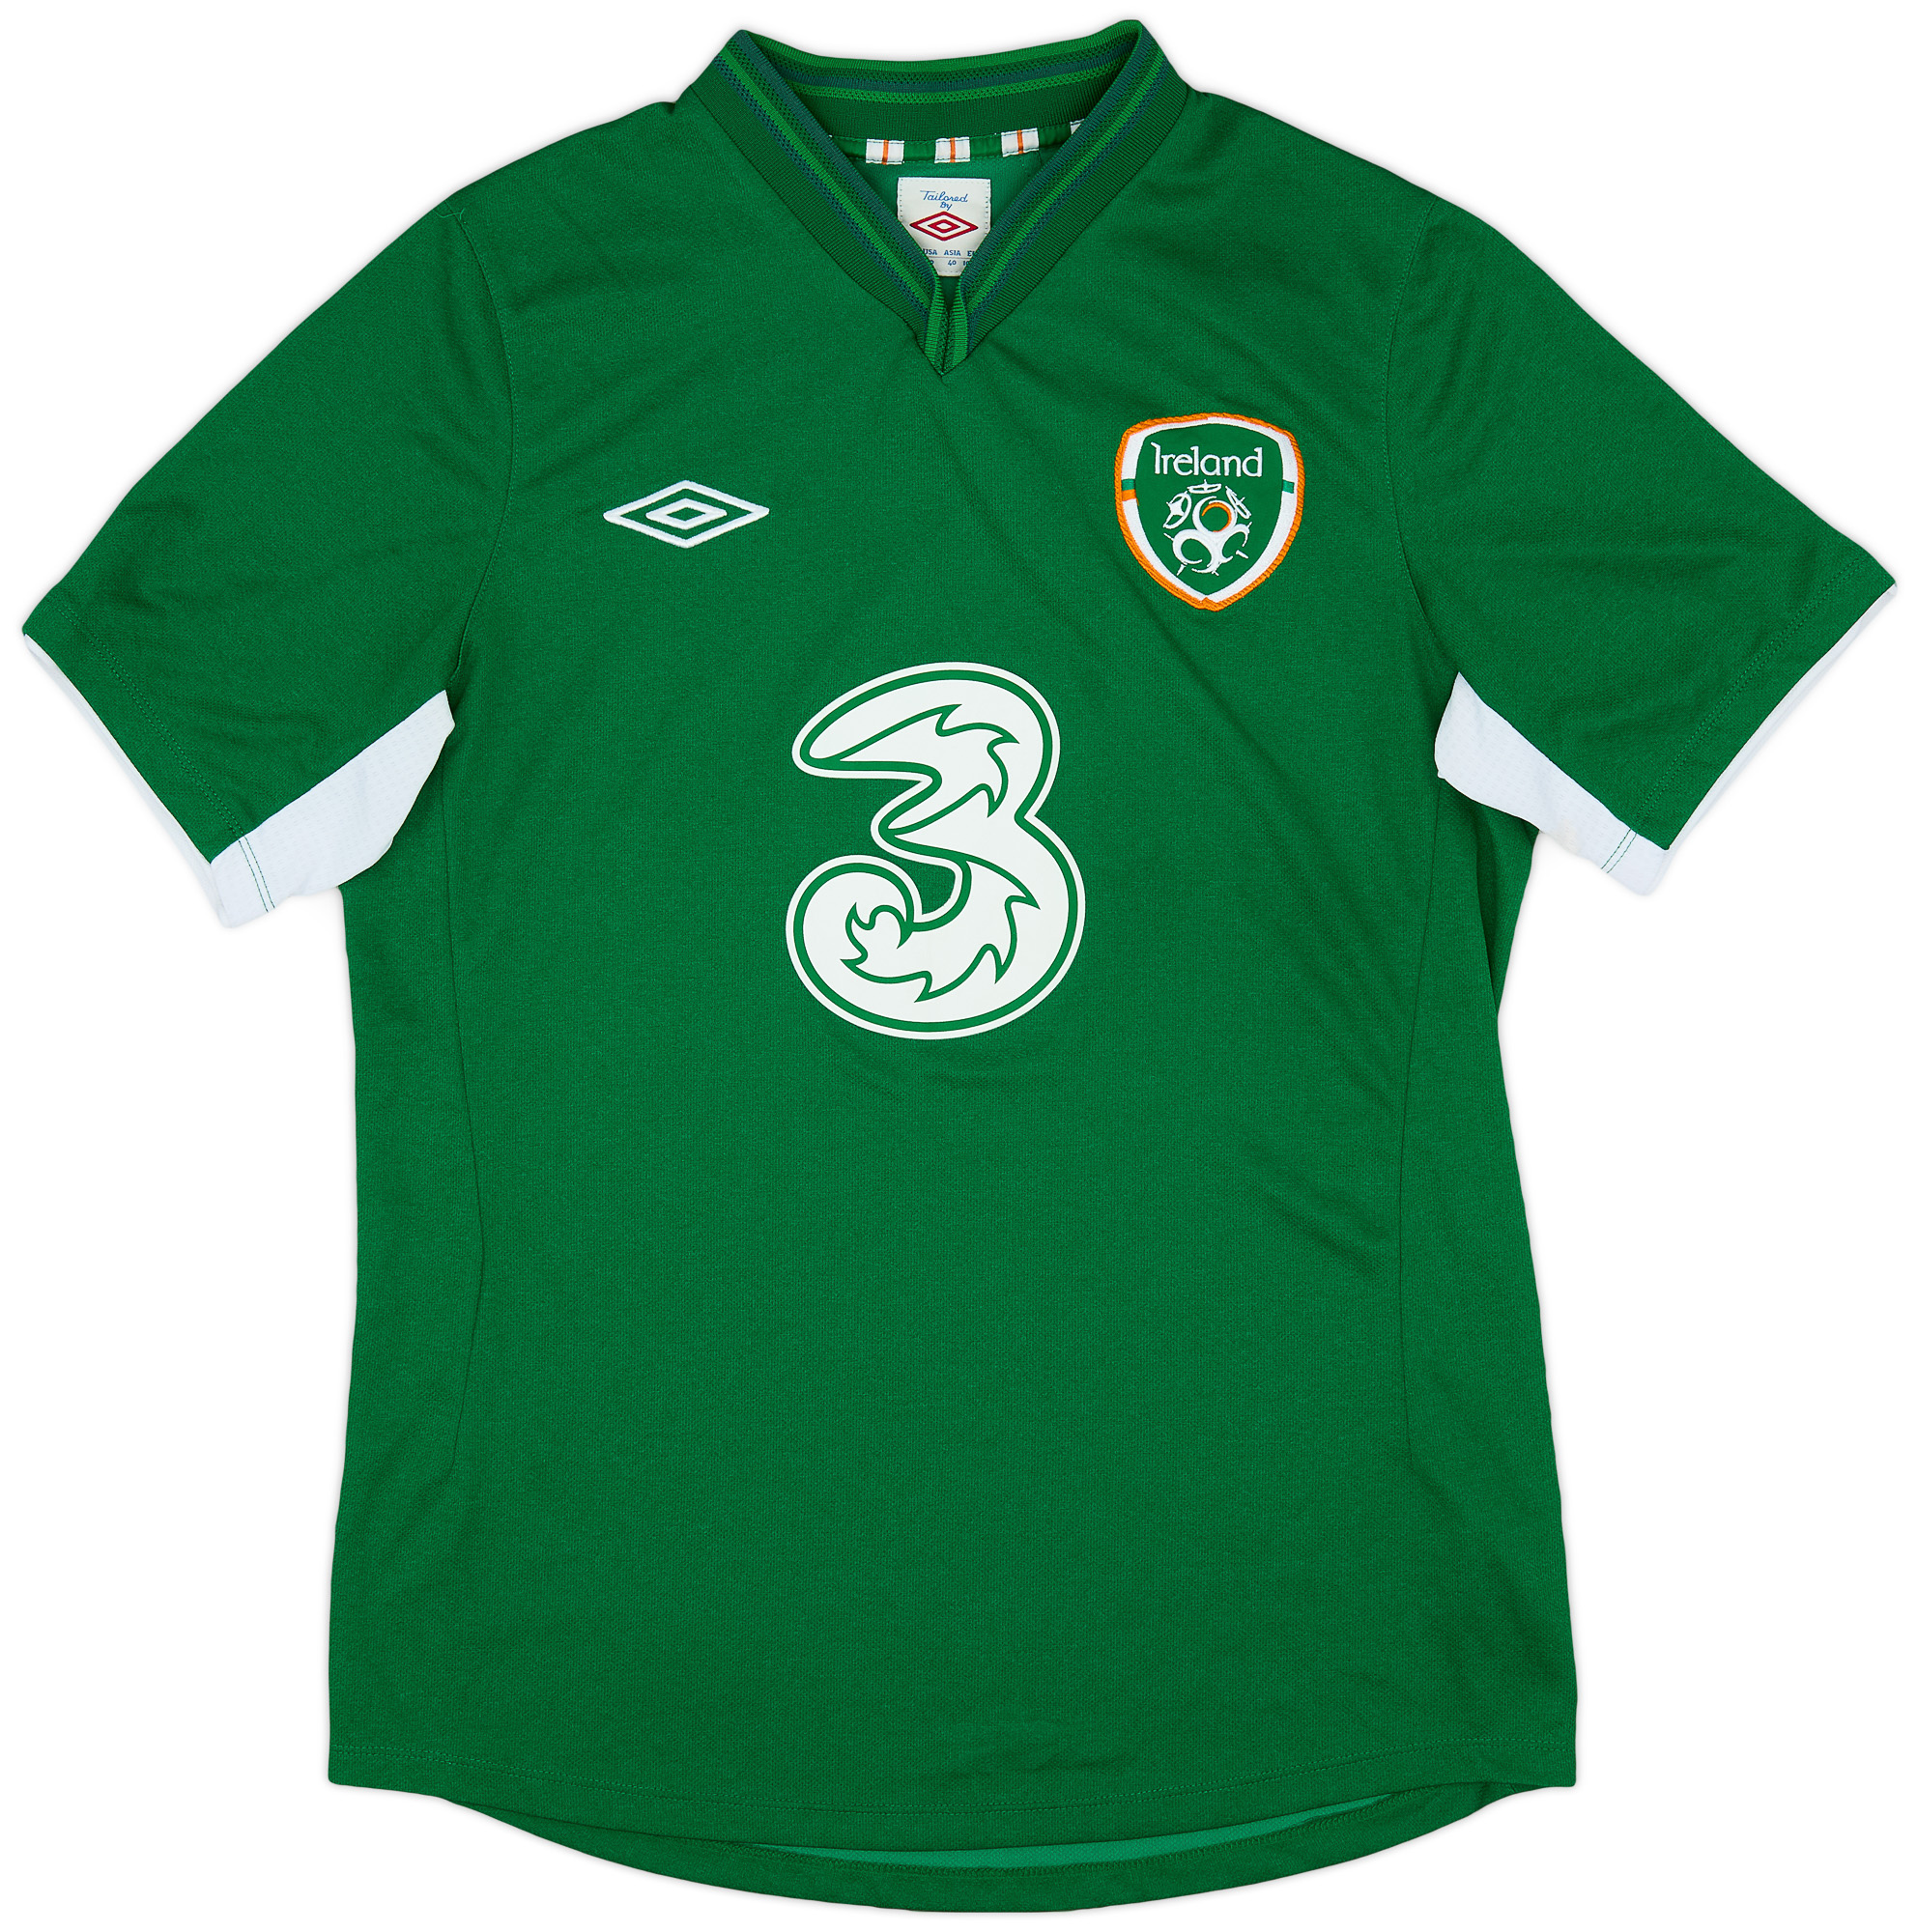 2013-14 Republic of Ireland Home Shirt - 9/10 - ()